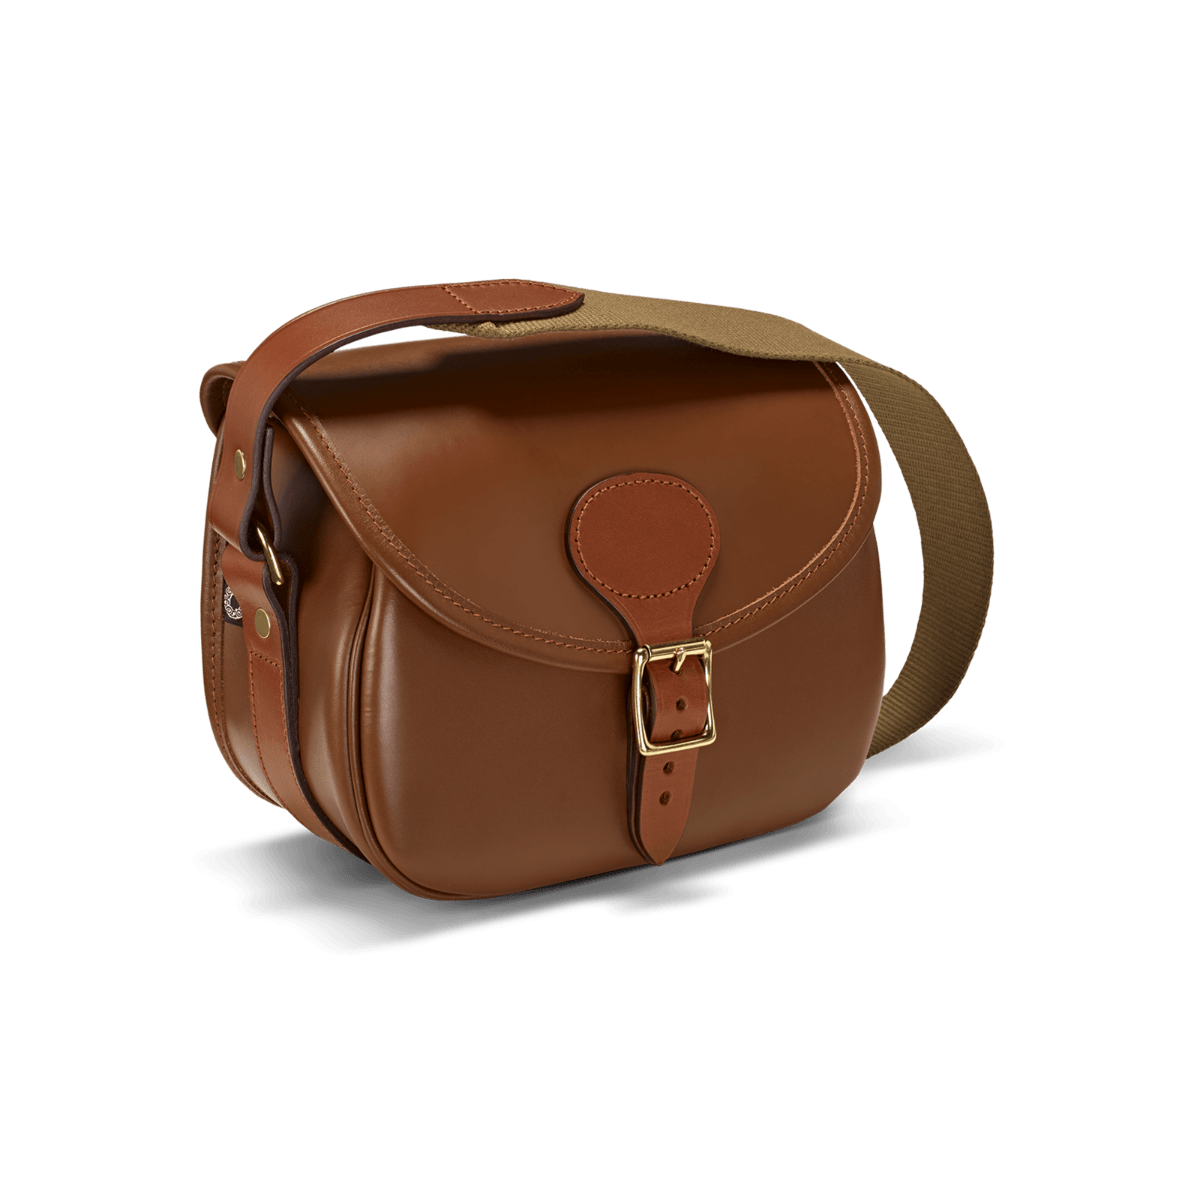 CROOTS Byland Cartridge Bag, læder, london tan - 150 patroner